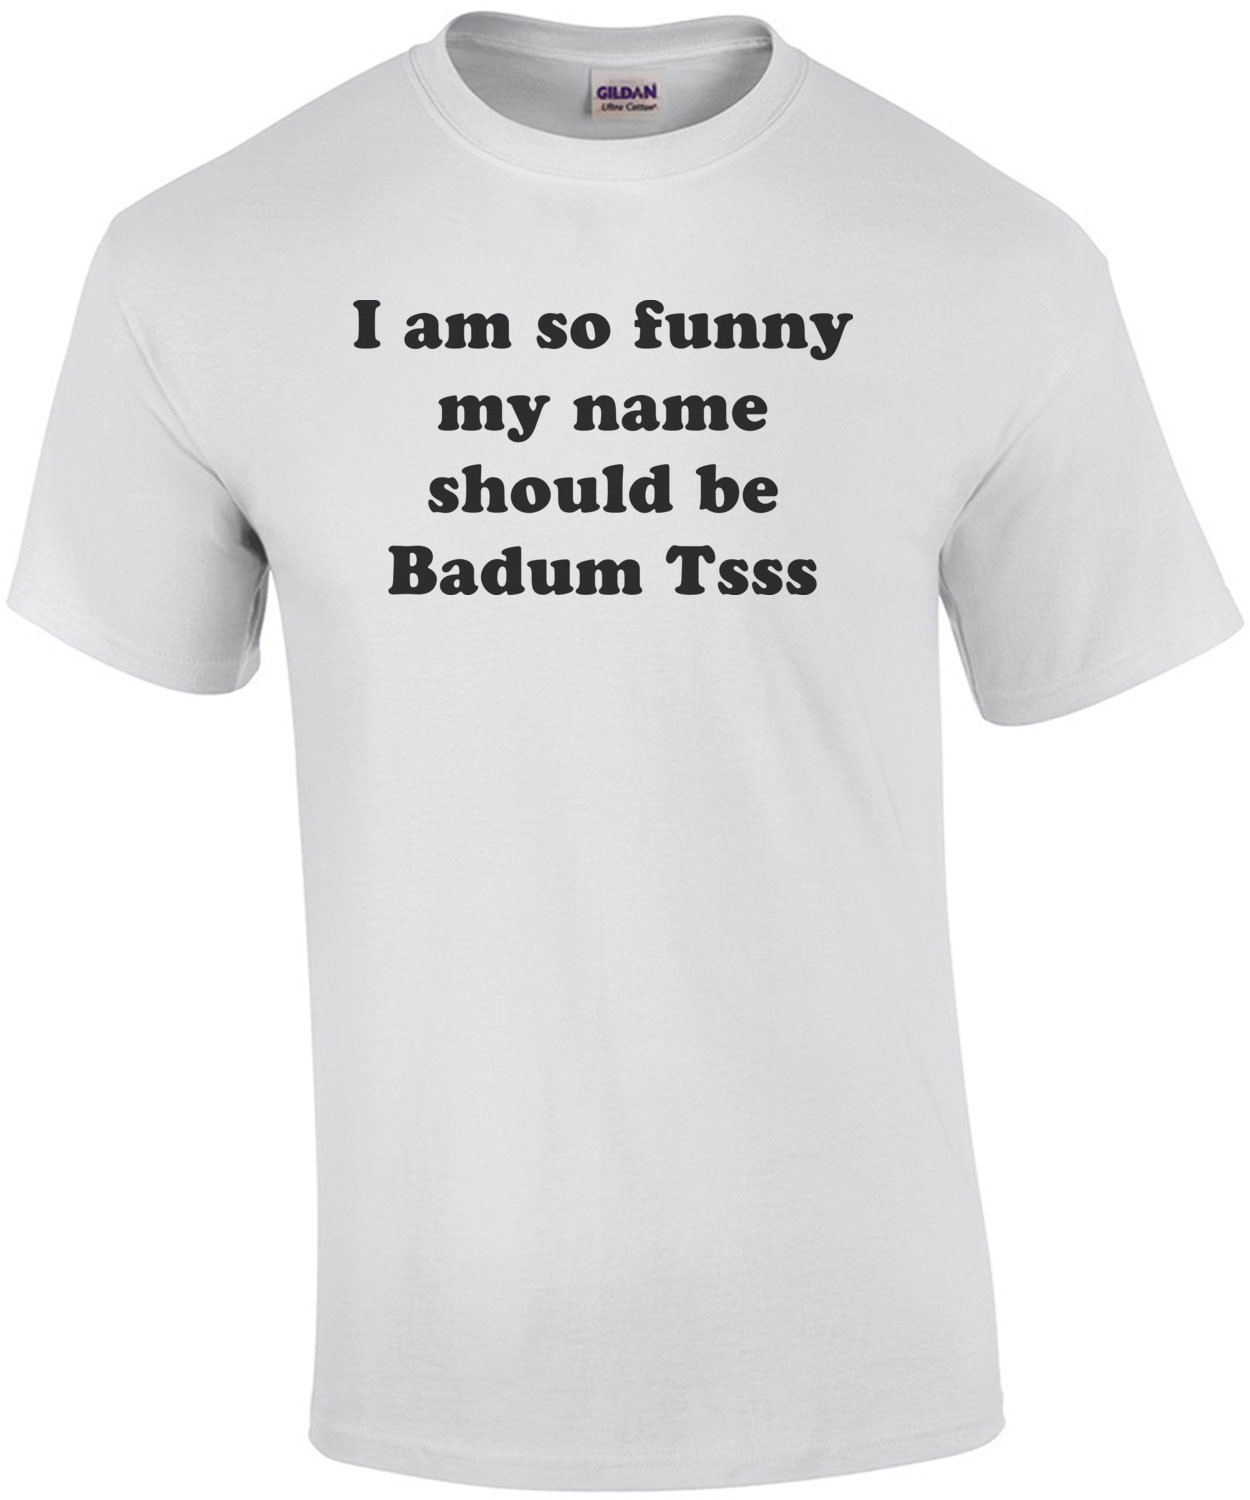 I am so hilarious my name should be Badum Tsss